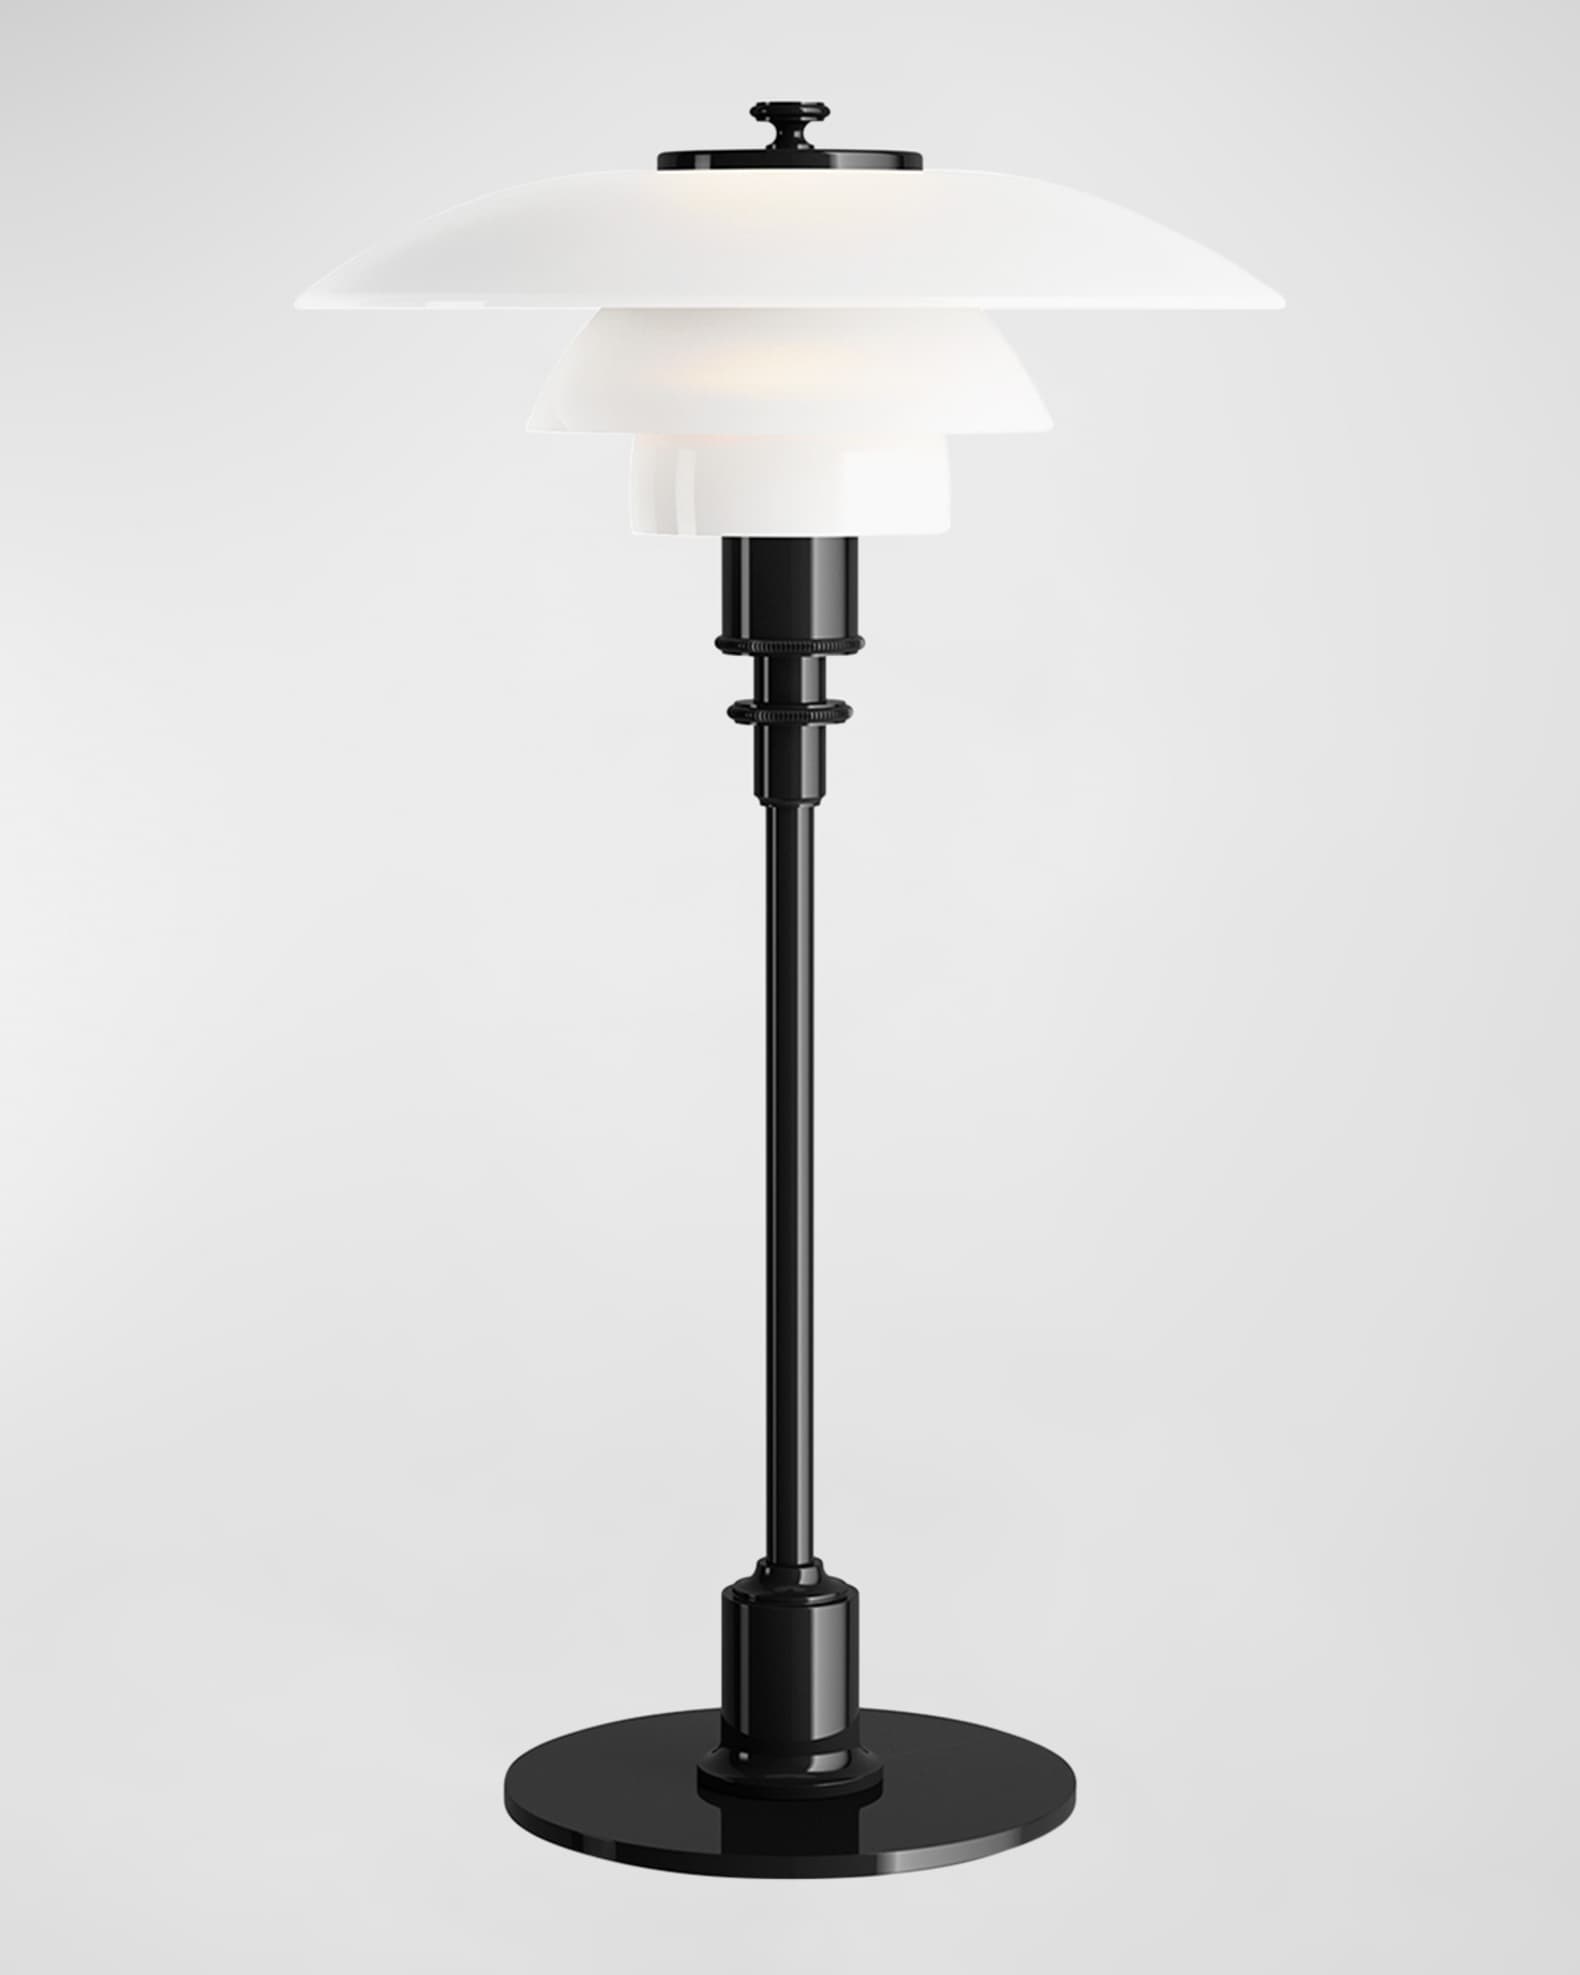 PH 3/2 Table Lamp Lamp Brass - Louis Poulsen - Buy online